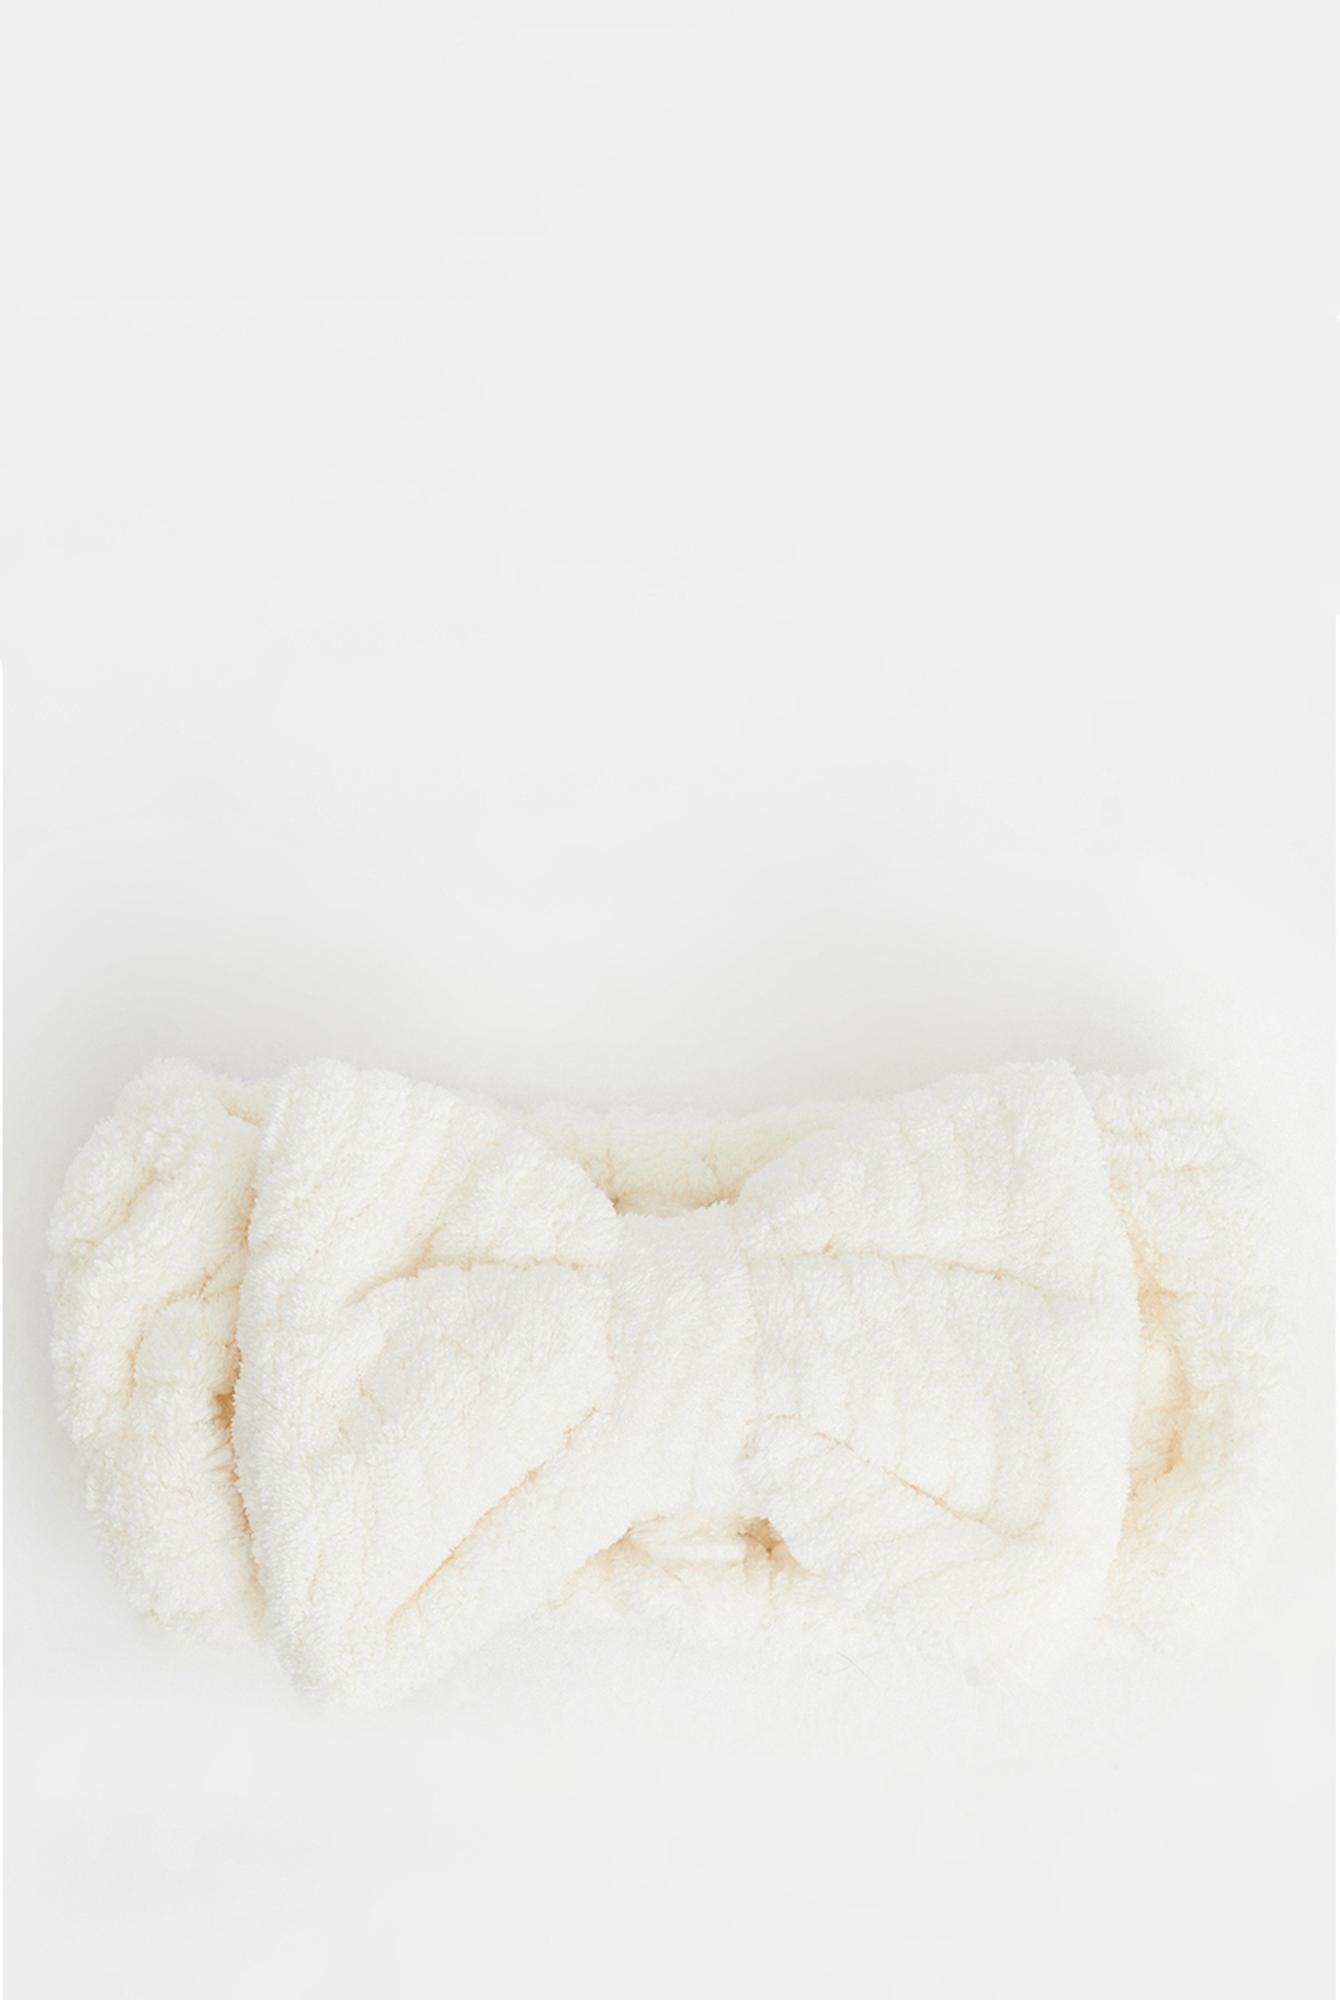  Yoyoso Fiyonklu Çizgili Saç Toplama Bandı Tacı Beyaz 9 x 18 cm